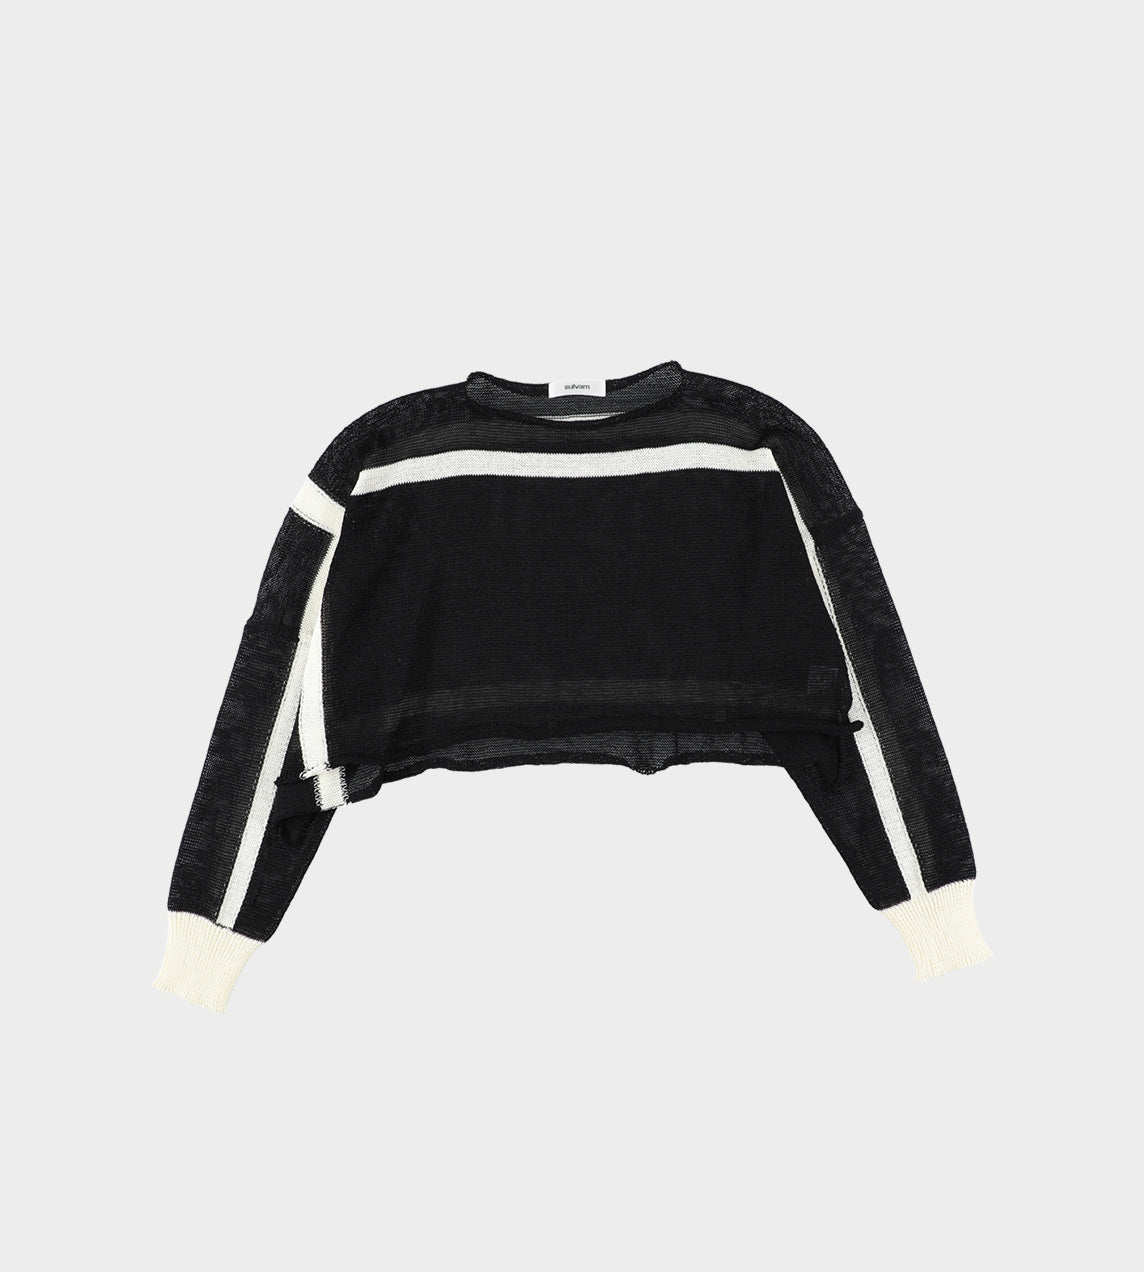 Sulvam - Short Knit Sweater Black/White